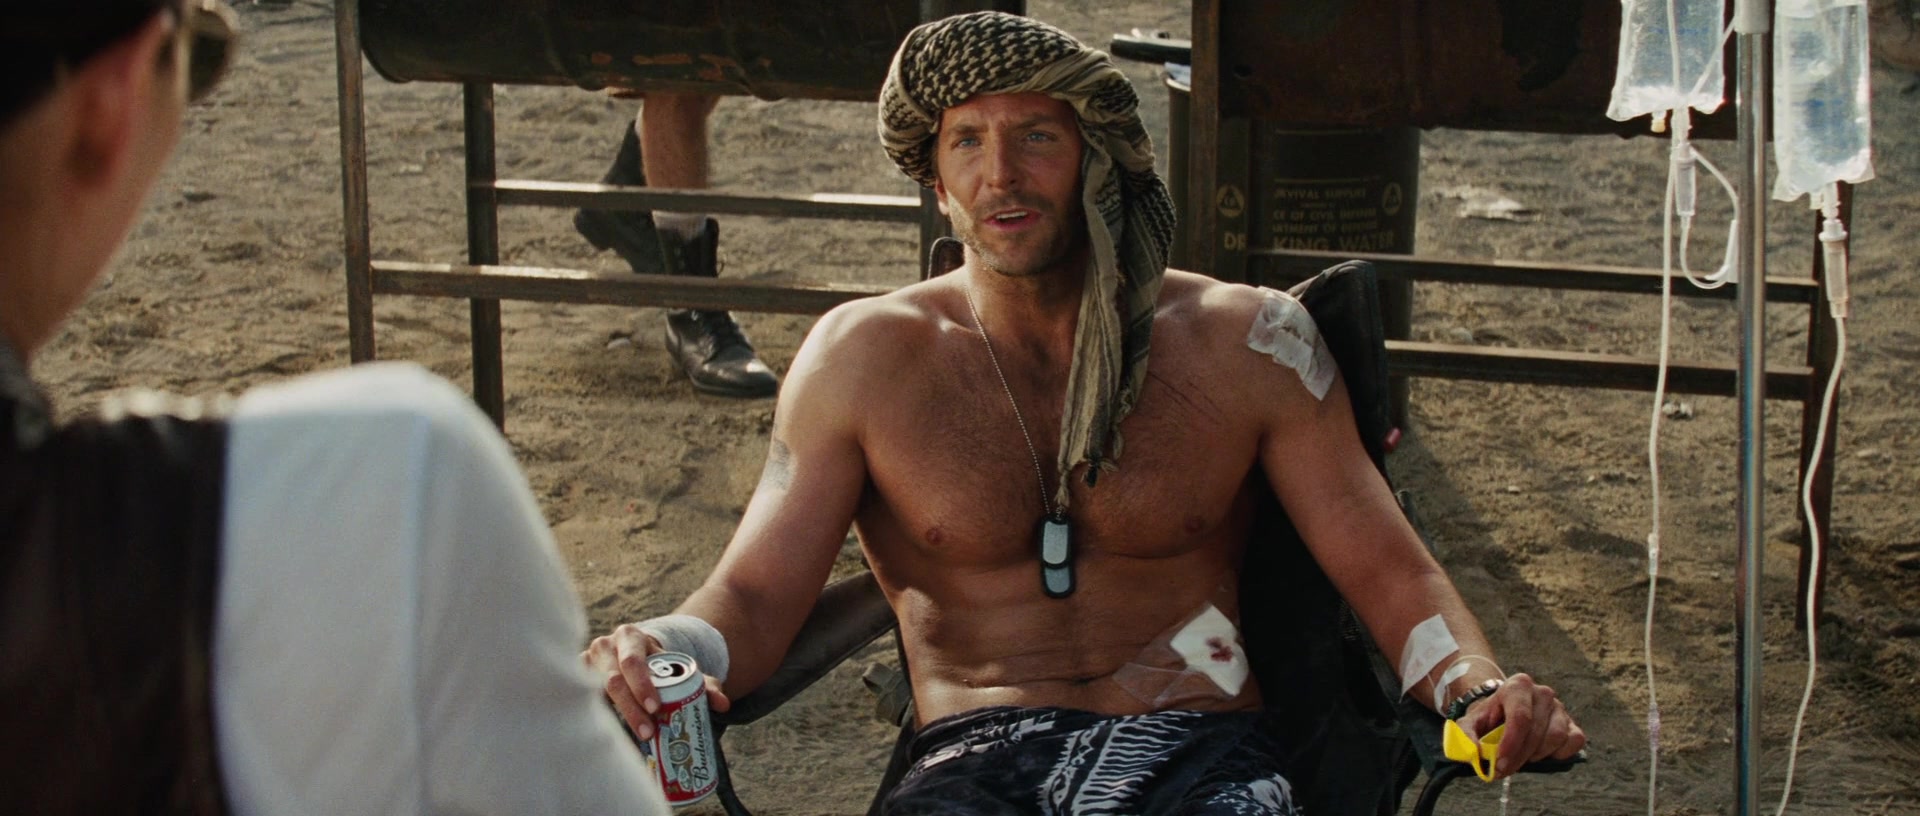 Budweiser Beer Drunk by Bradley Cooper in The A-Team (2010) Movie1920 x 816